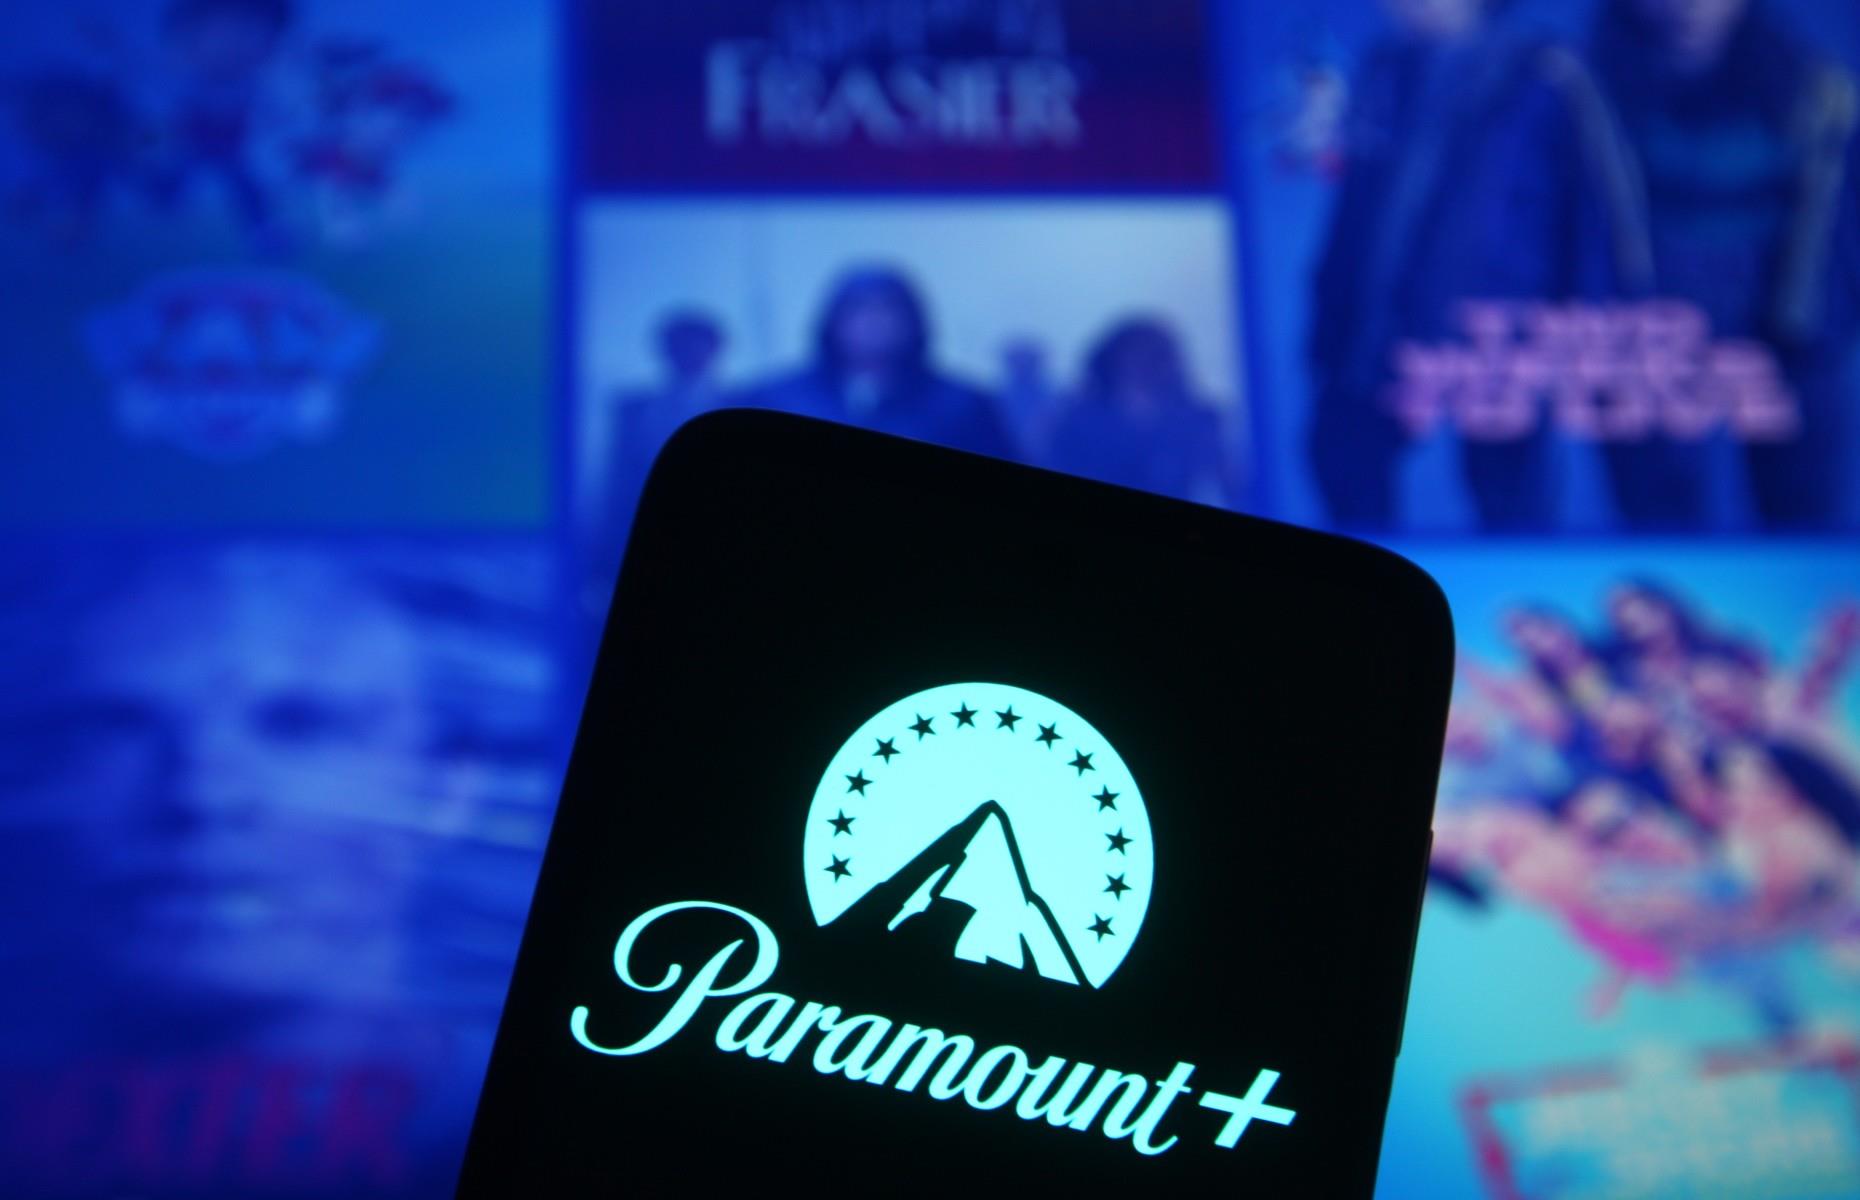 Paramount+ – 43.3 million subscribers